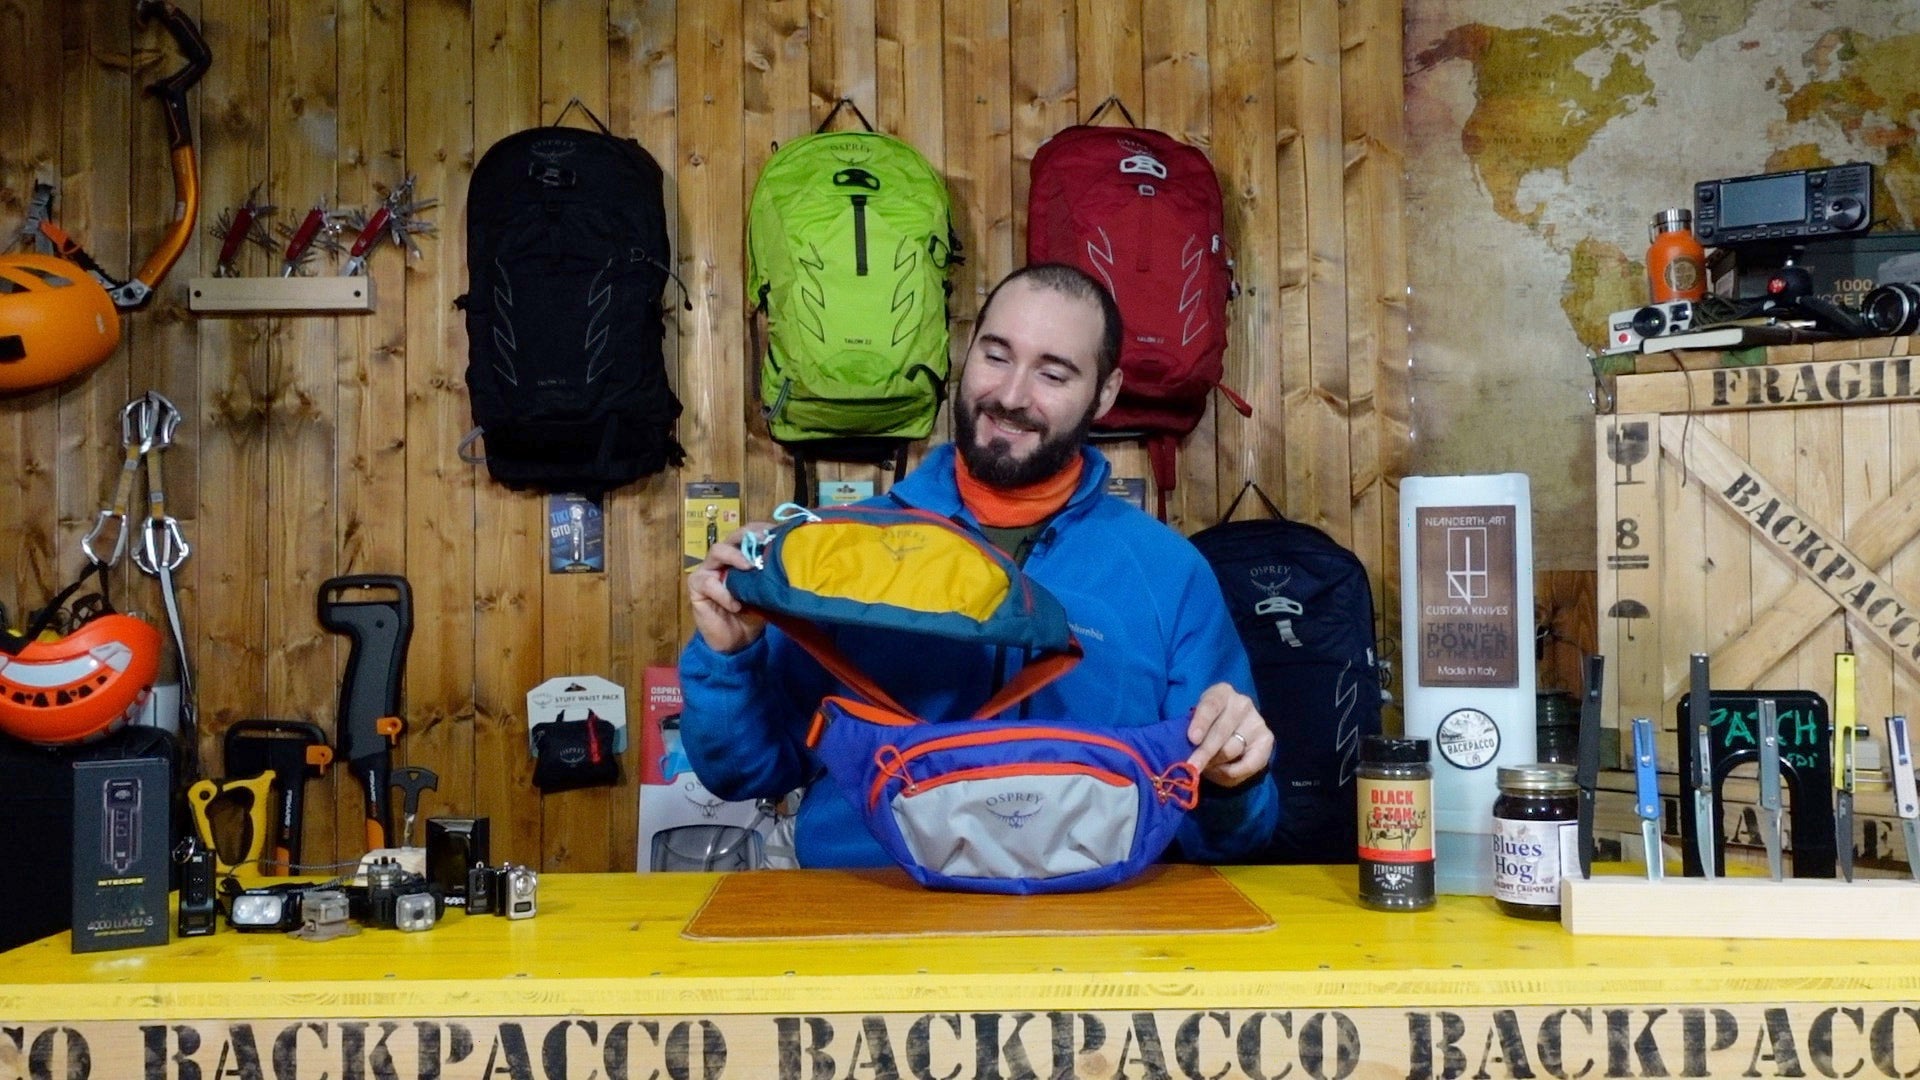 Paolo di backpacco spiega l'Osprey Daylite waist